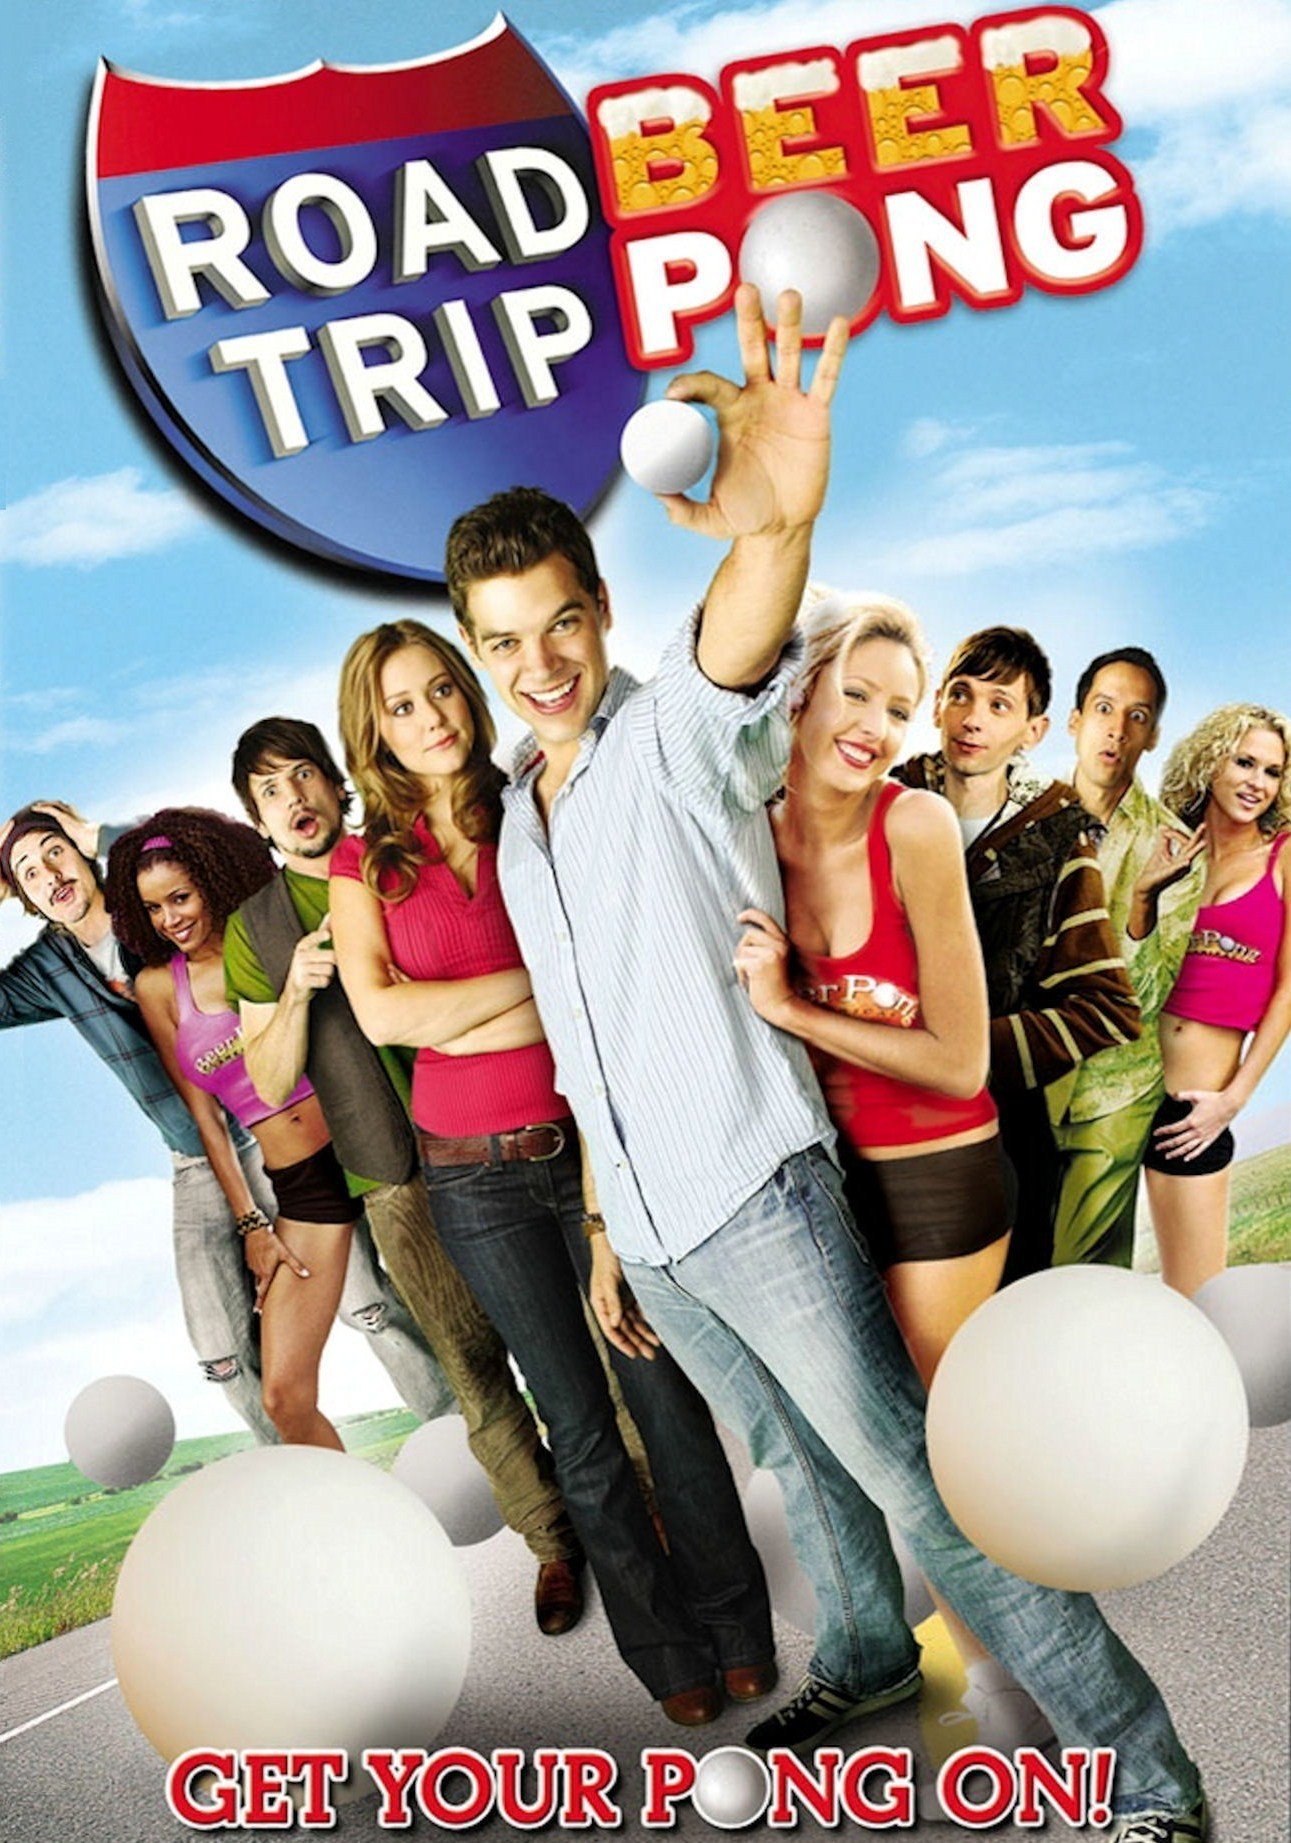 Road Trip Beer Pong 2009 Streaming Trama Cast Trailer 